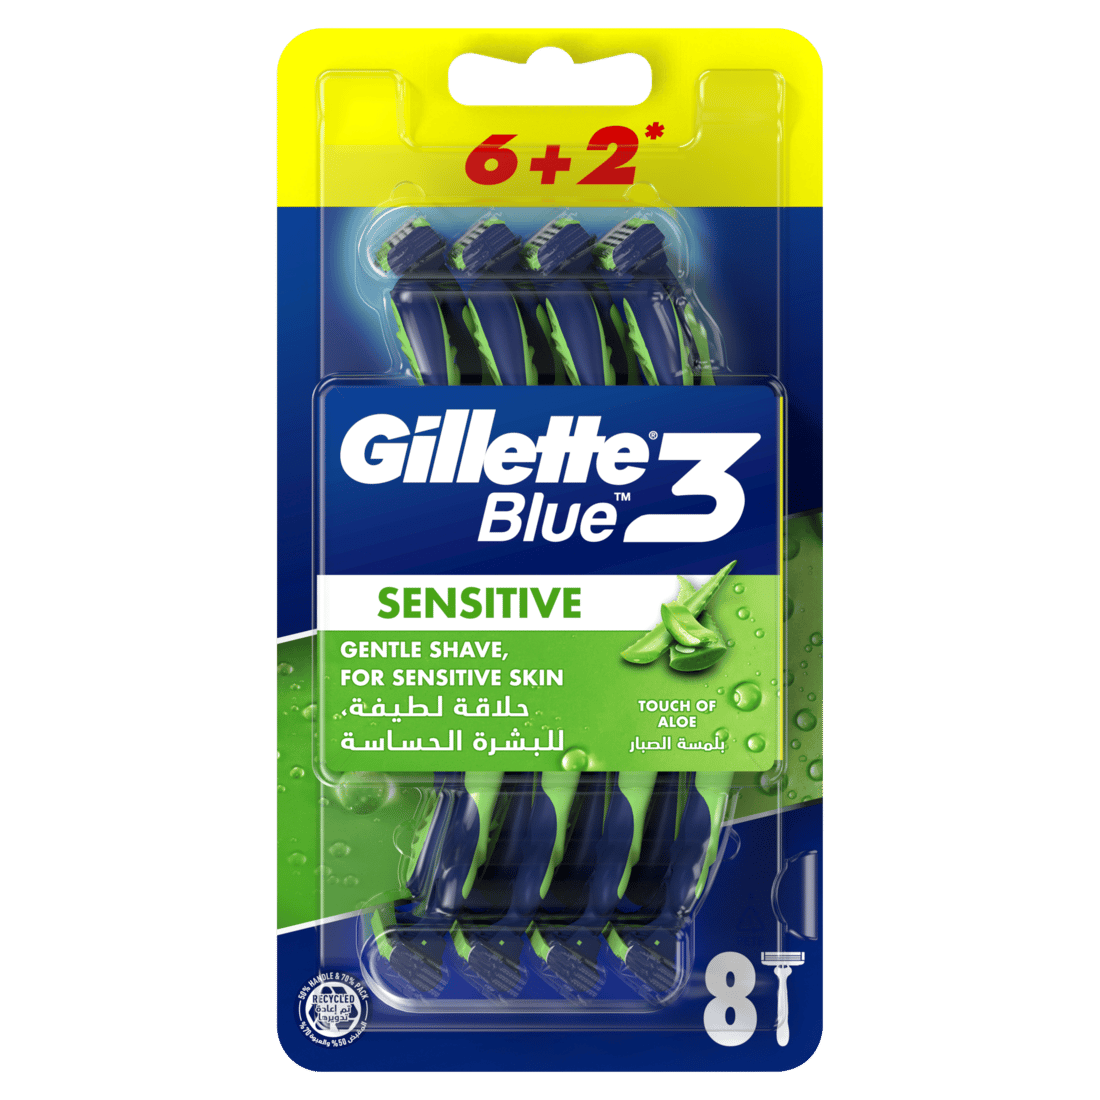 GILLETTE 648 BLUE3 SENSITIVE 6+2CT MEA